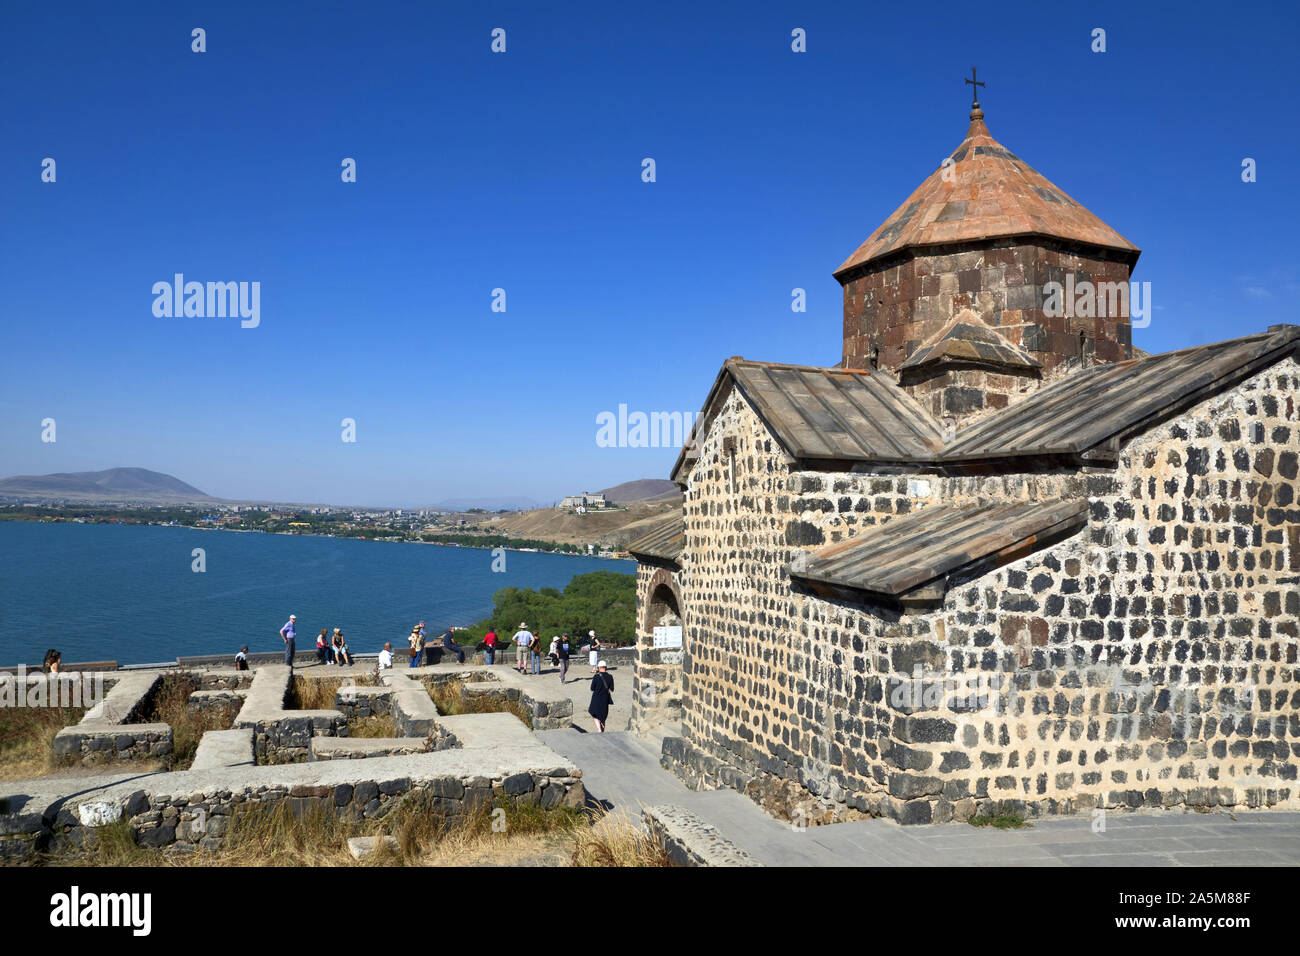 Armenia: Monasterio de Sevanavank y lago Sevan Foto de stock